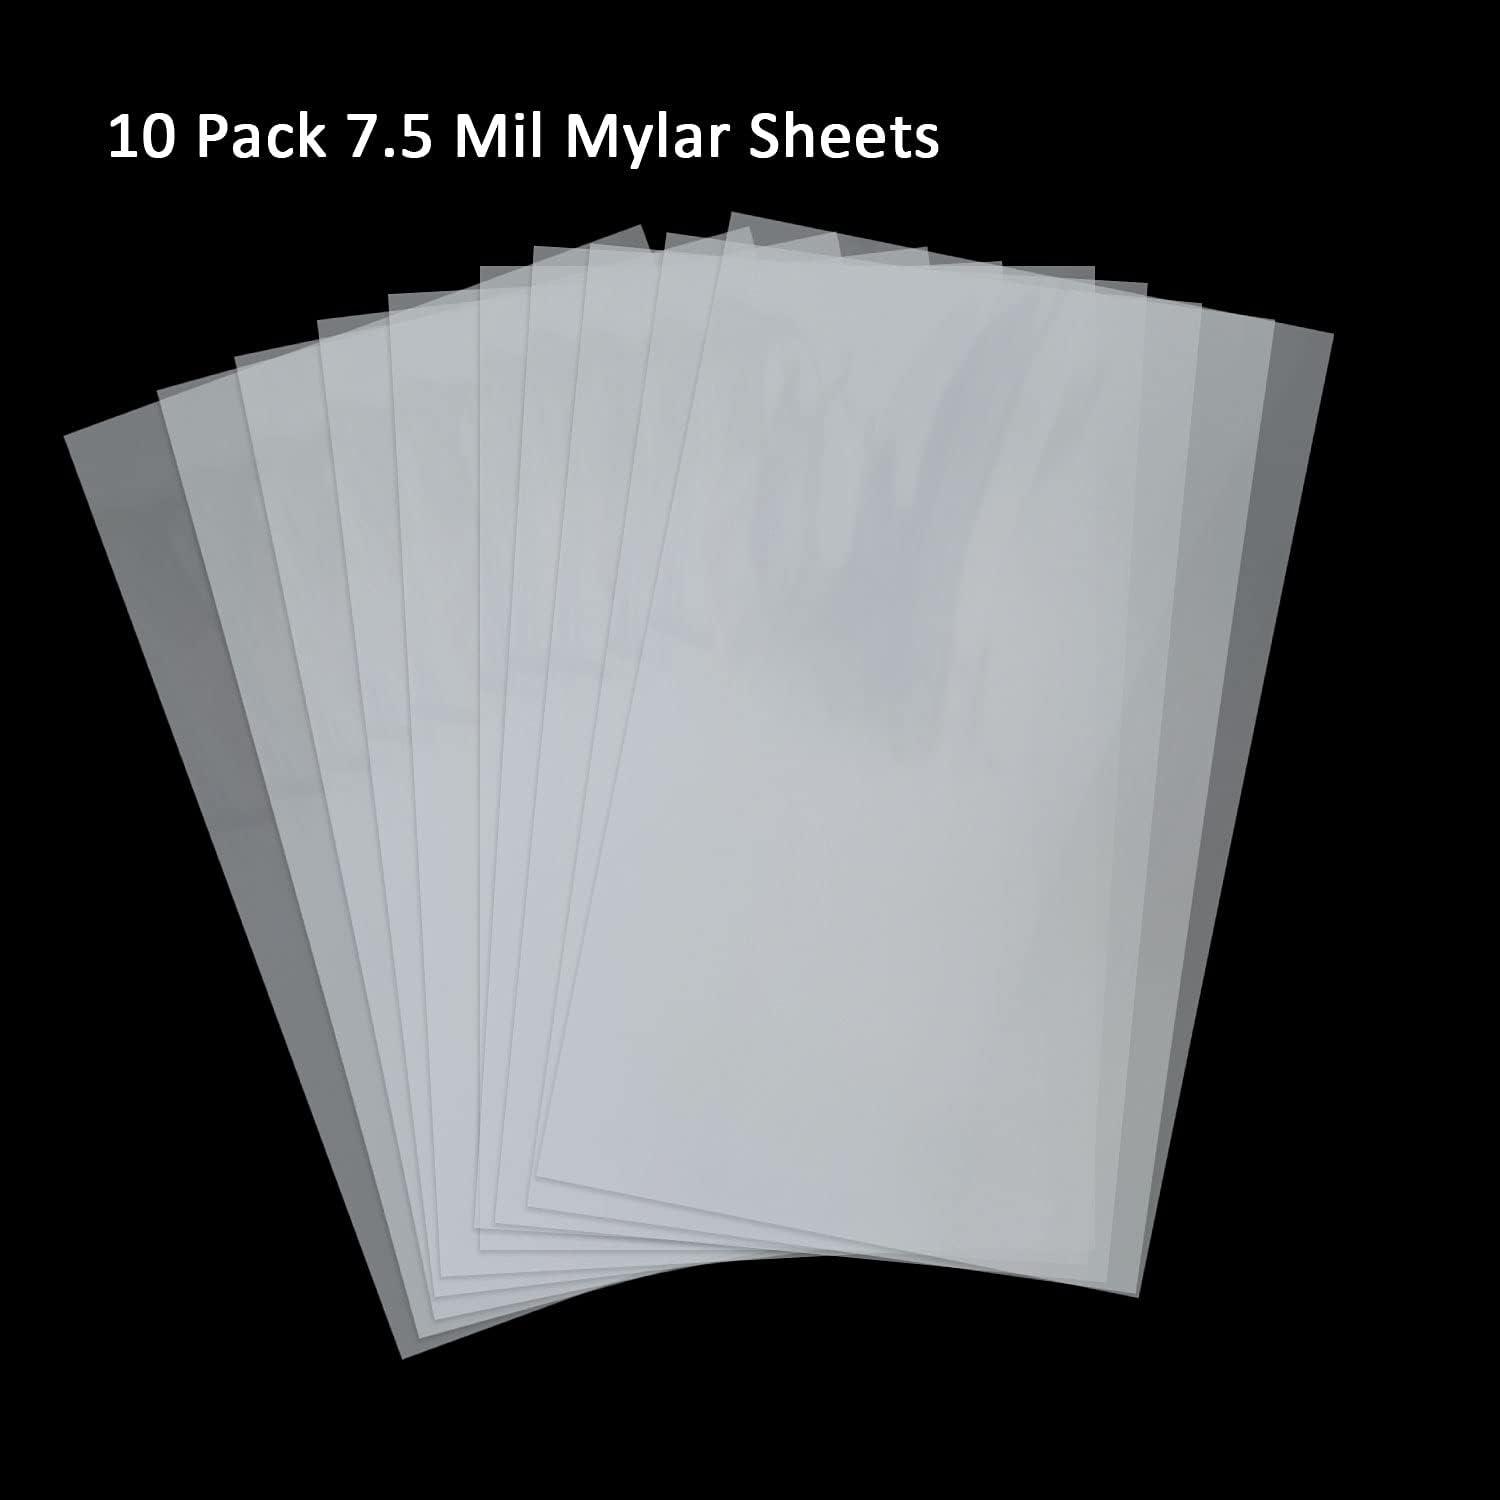 10 Pack 7.5 Mil Blank Stencil Sheets 12 x 24 inch Mylar Sheet